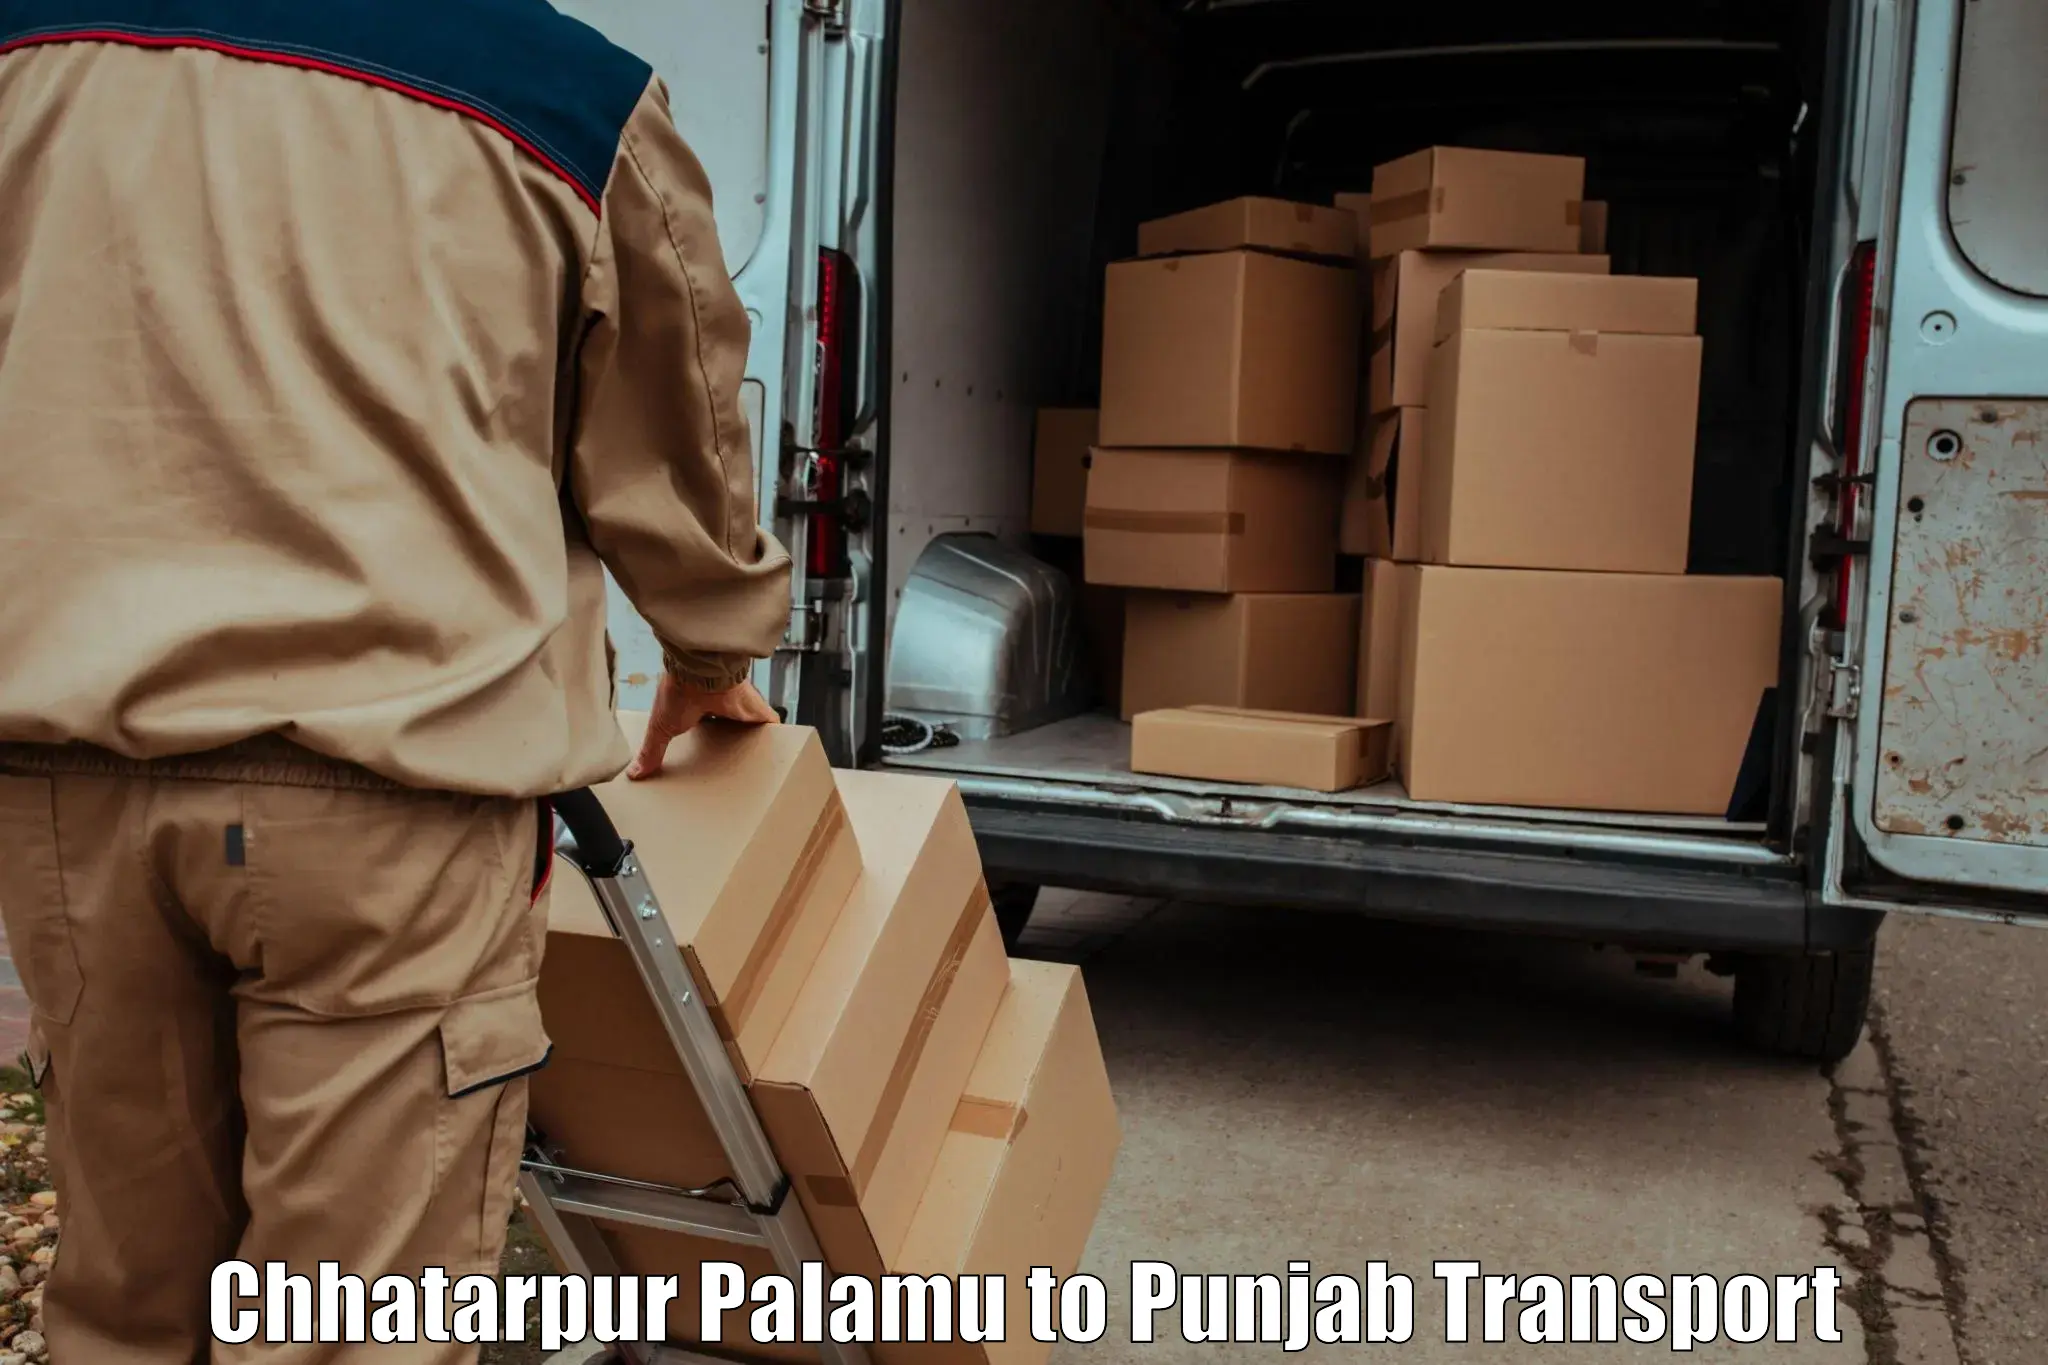 Air freight transport services Chhatarpur Palamu to Amritsar